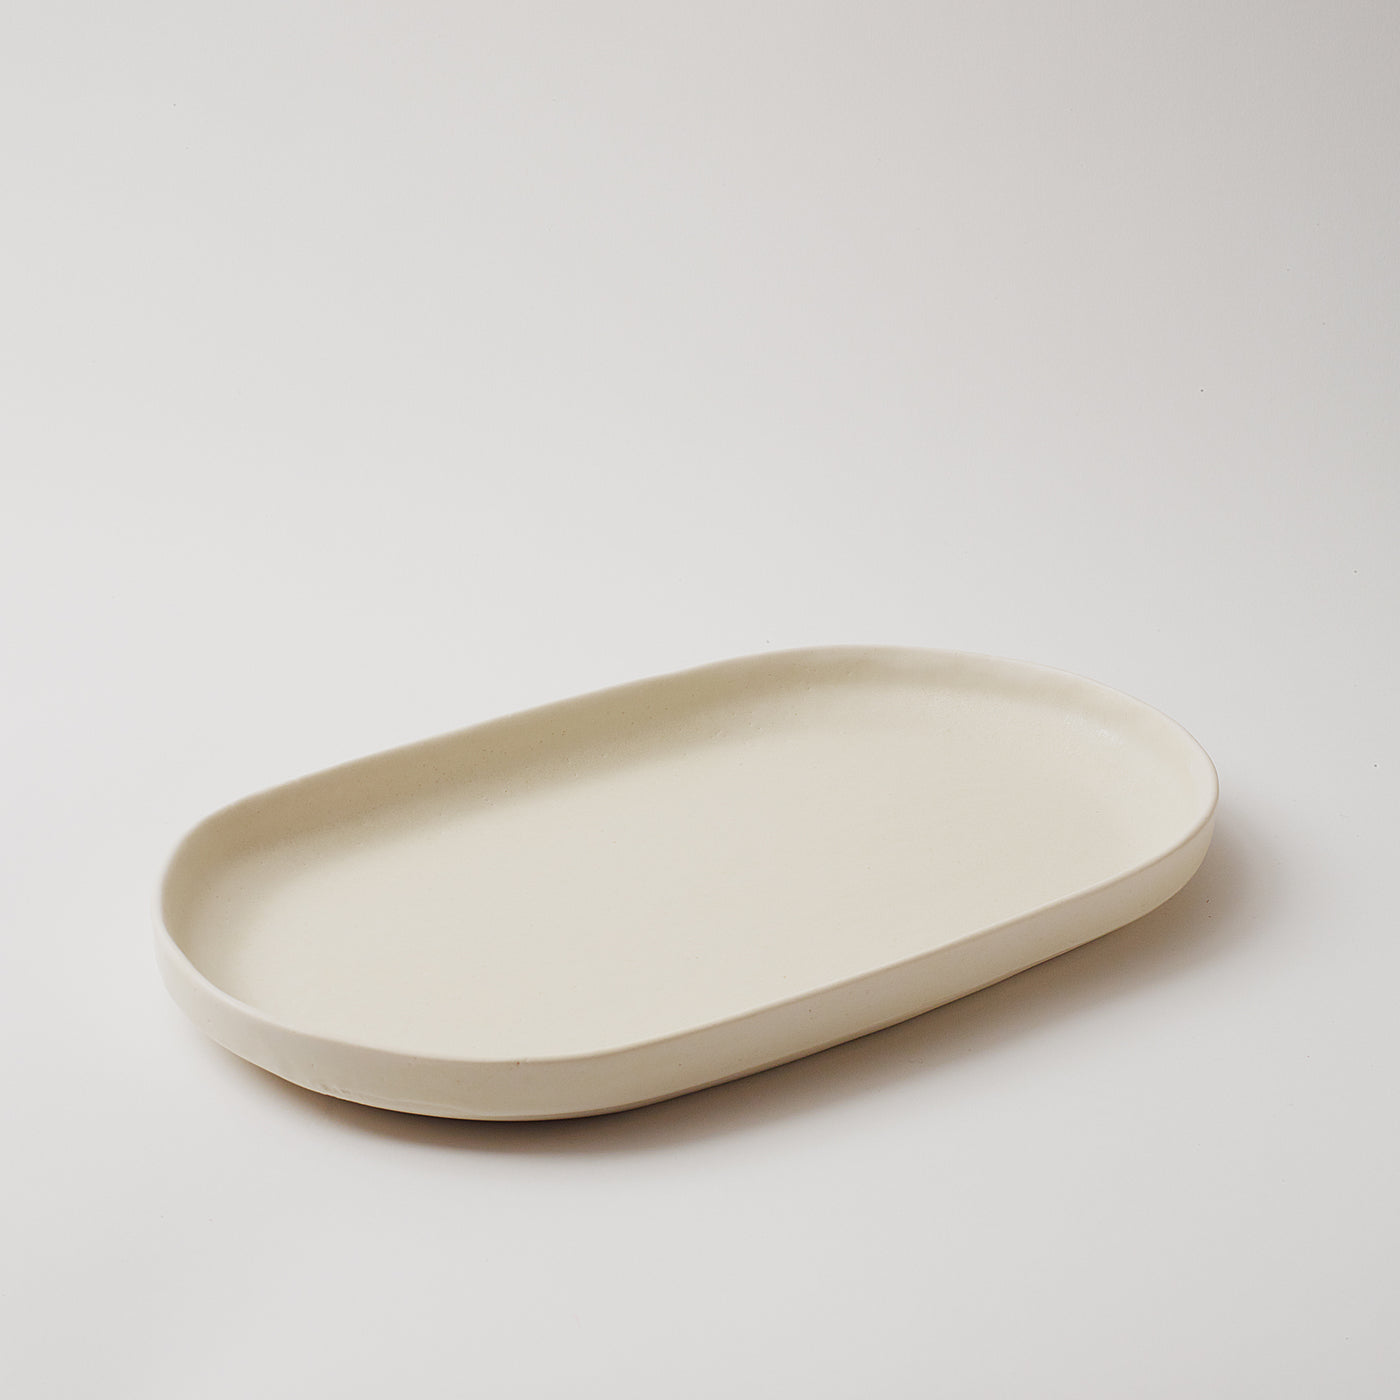 Large Oval Platter by Lauren HB Studio